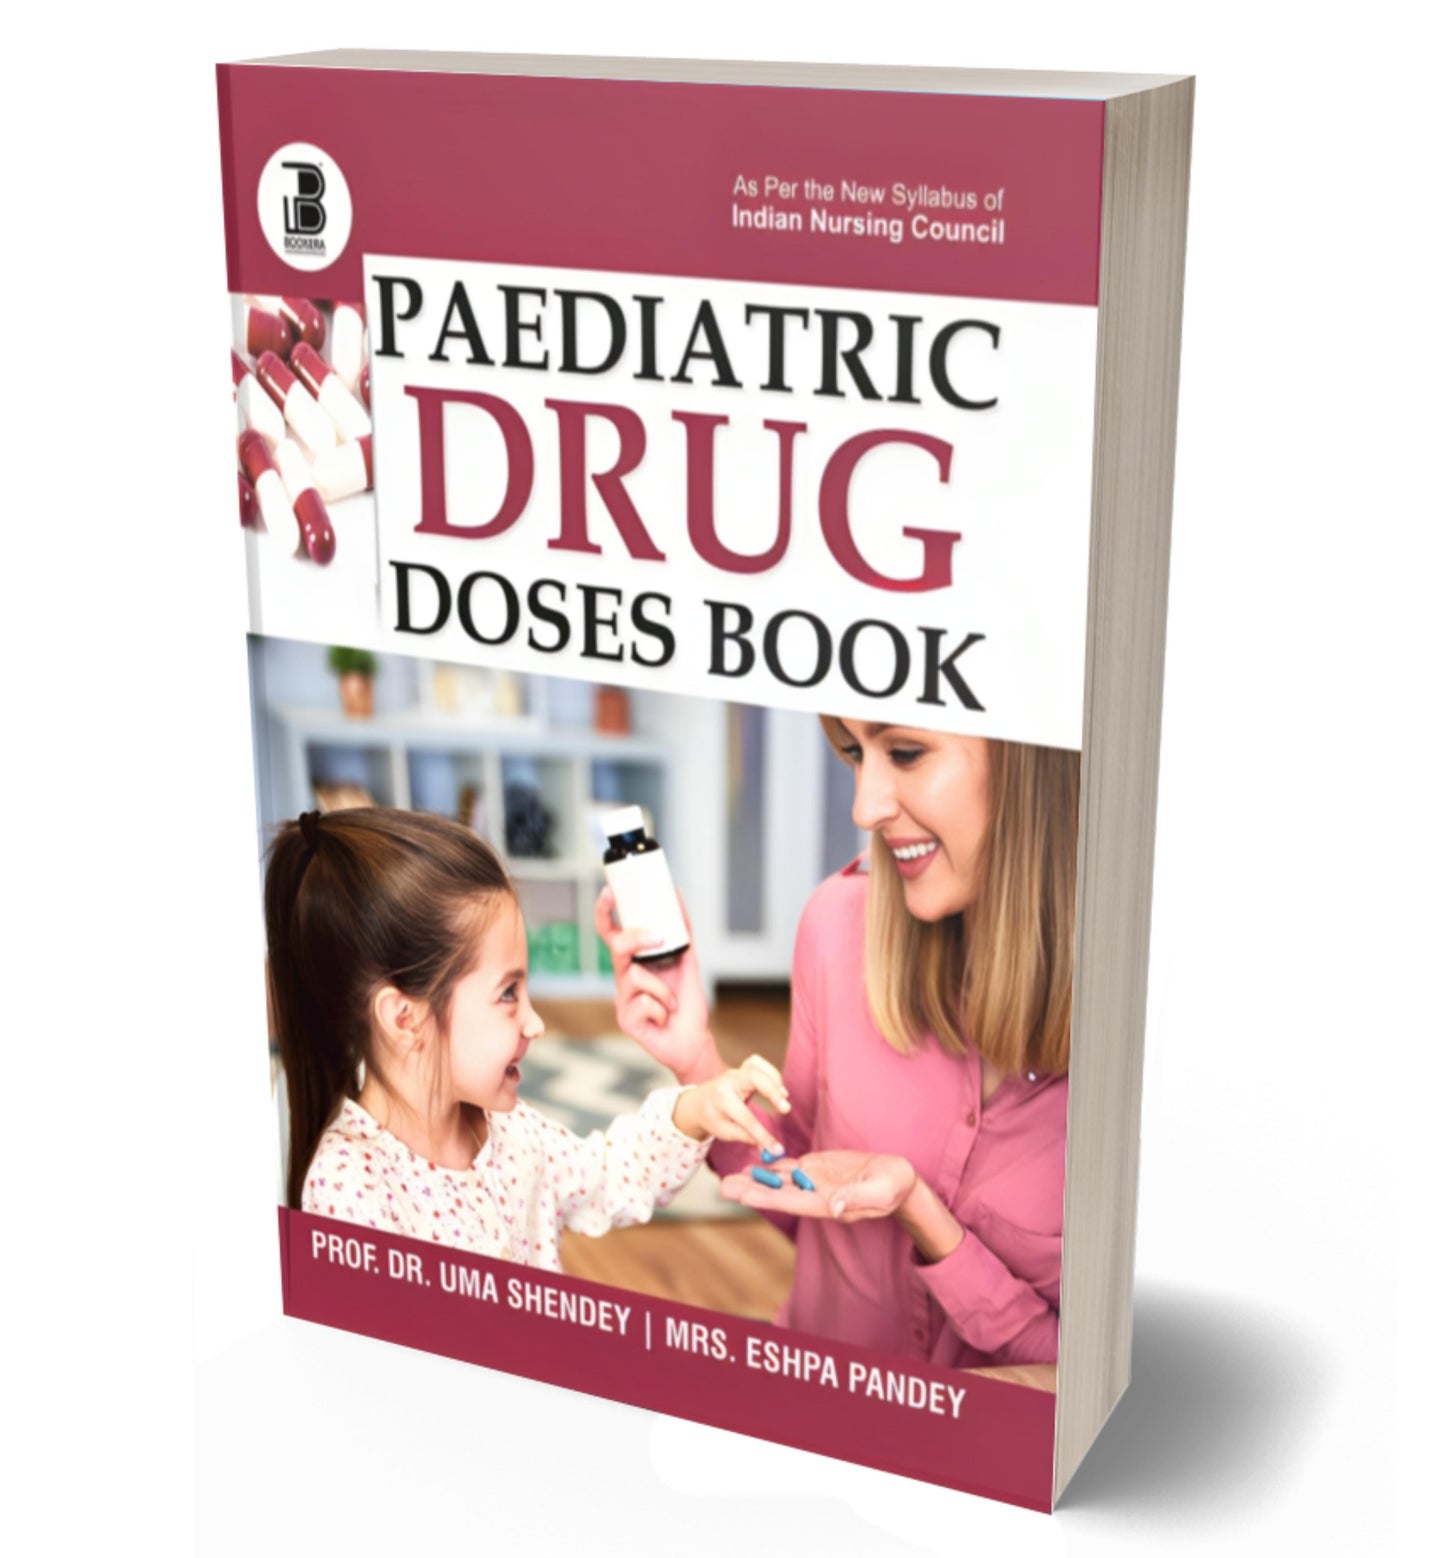 Paediatric Drug Doses Book